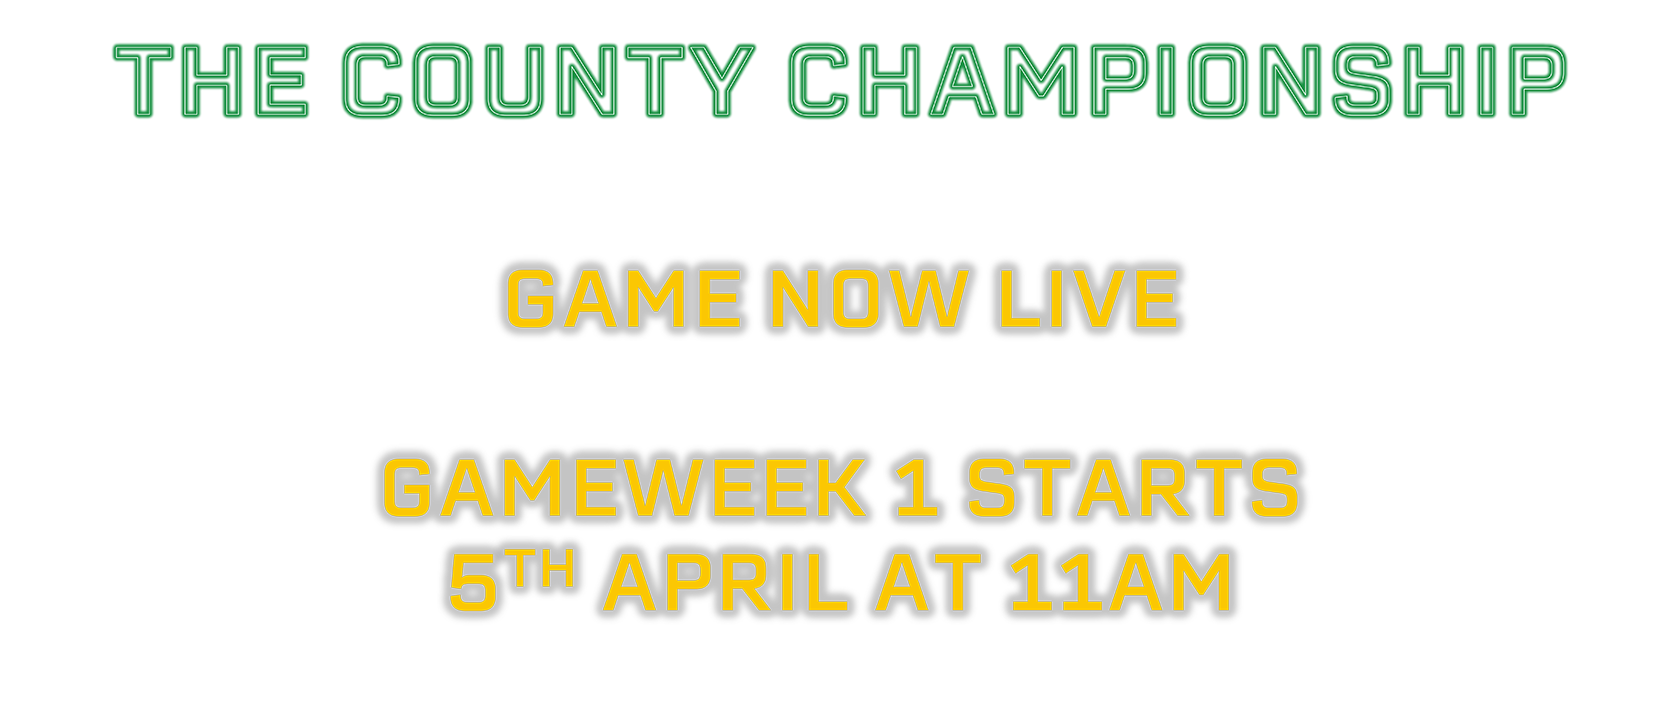 County Championship Fantasy Cricket Coming Soon